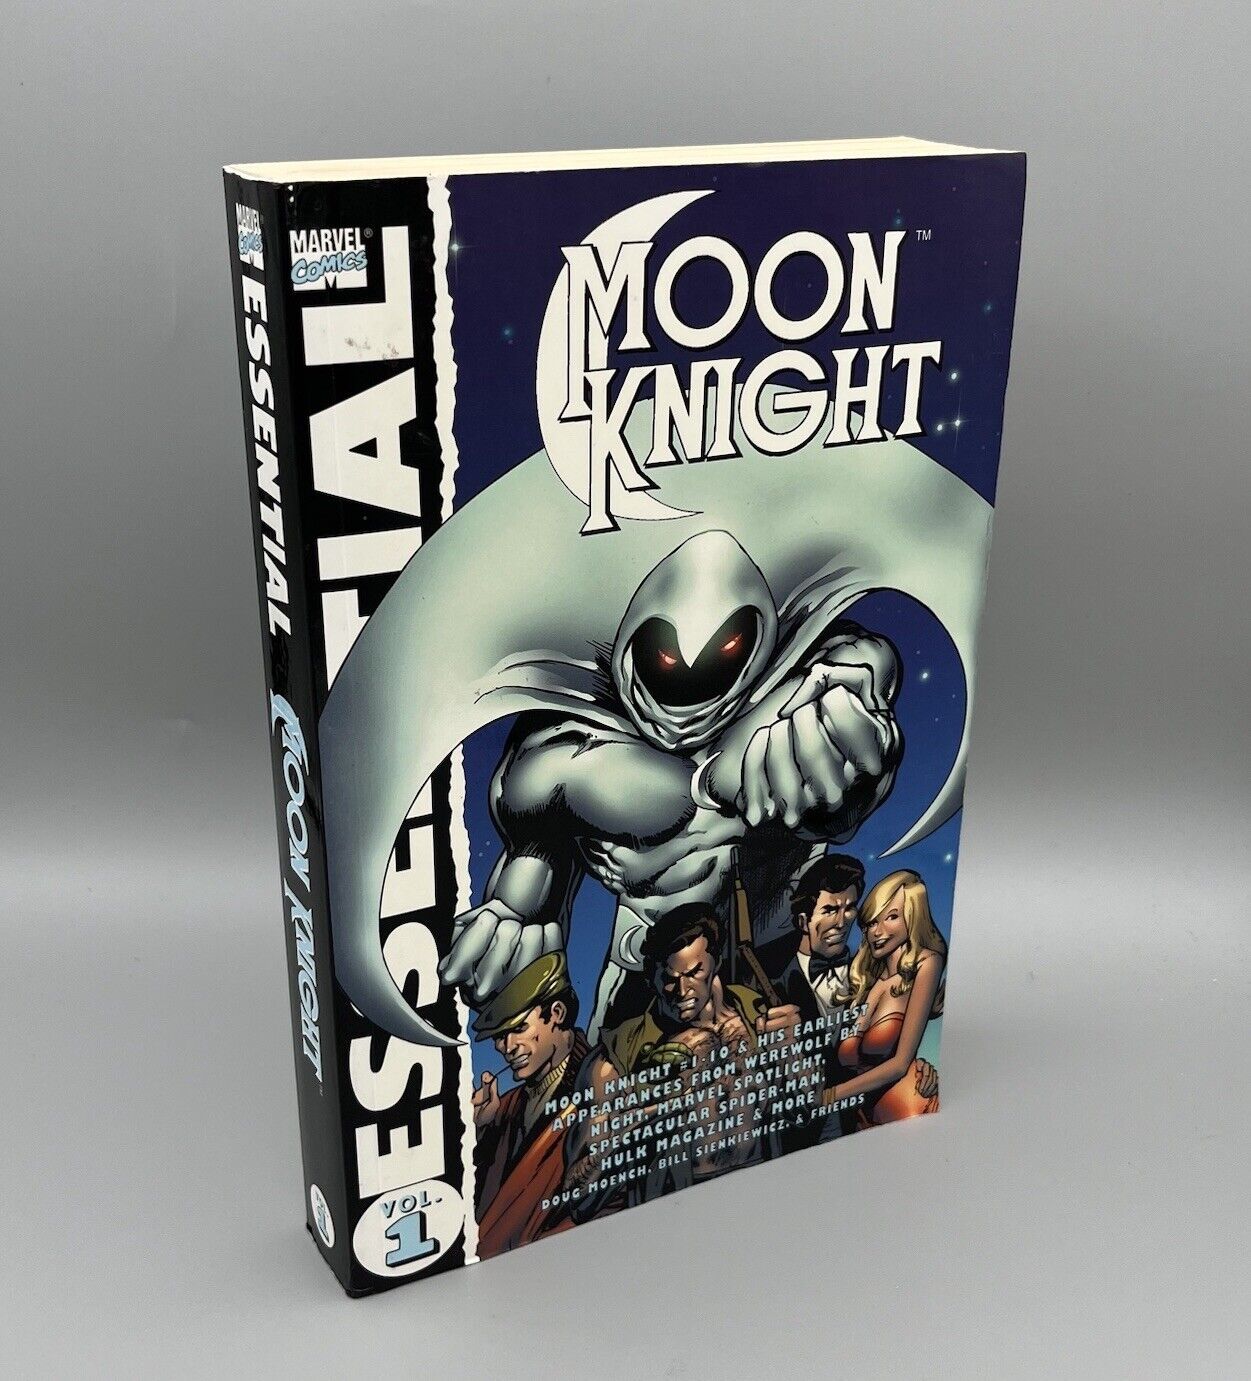 Essential Moon Knight #1 (Marvel Comics) TPB Graphic Novel